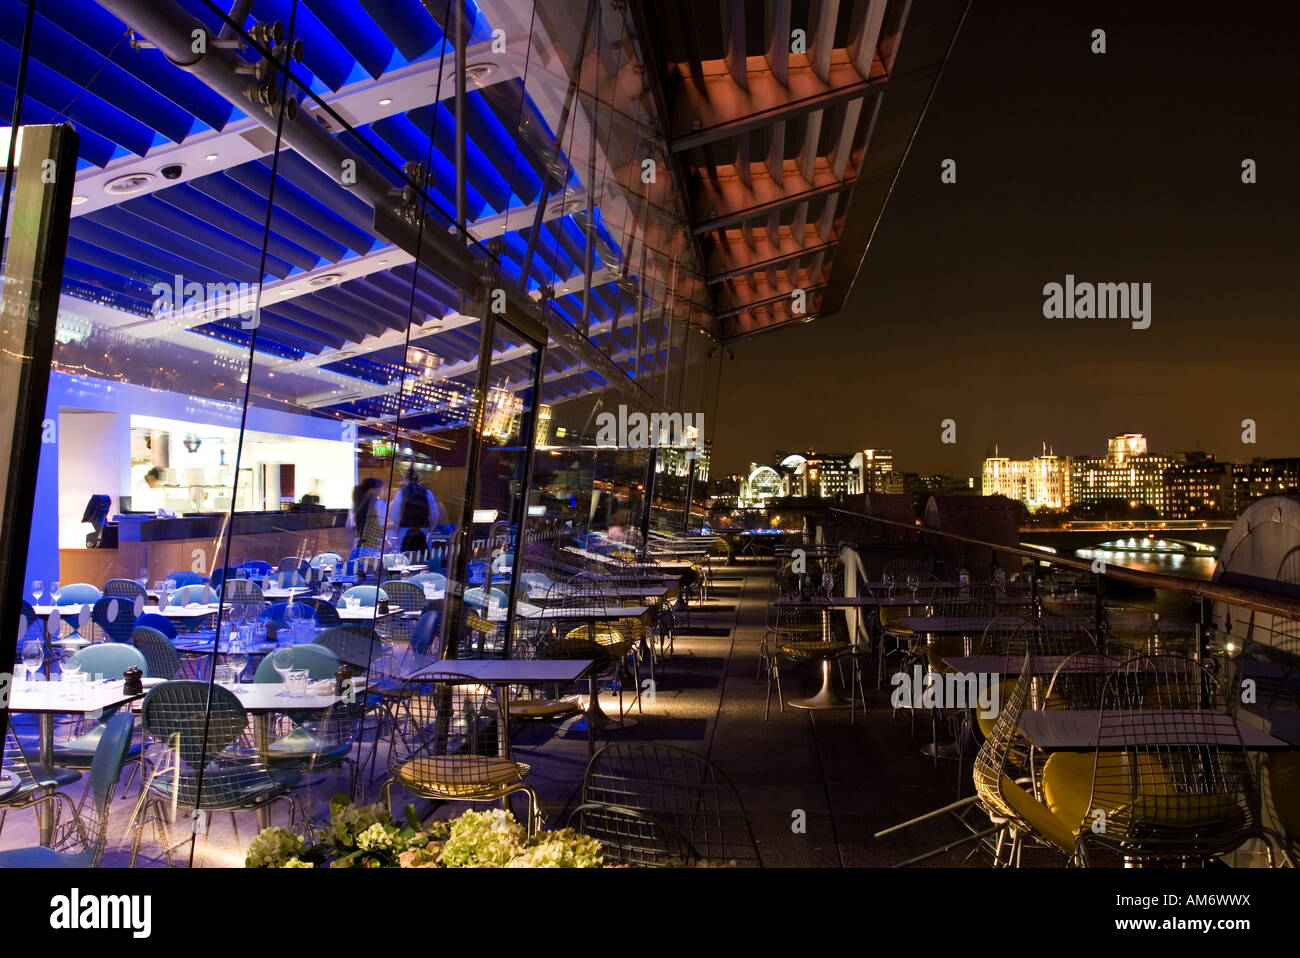 OXO Tower Restaurant, Bar & Brasserie - Londres Fotografía de stock - Alamy